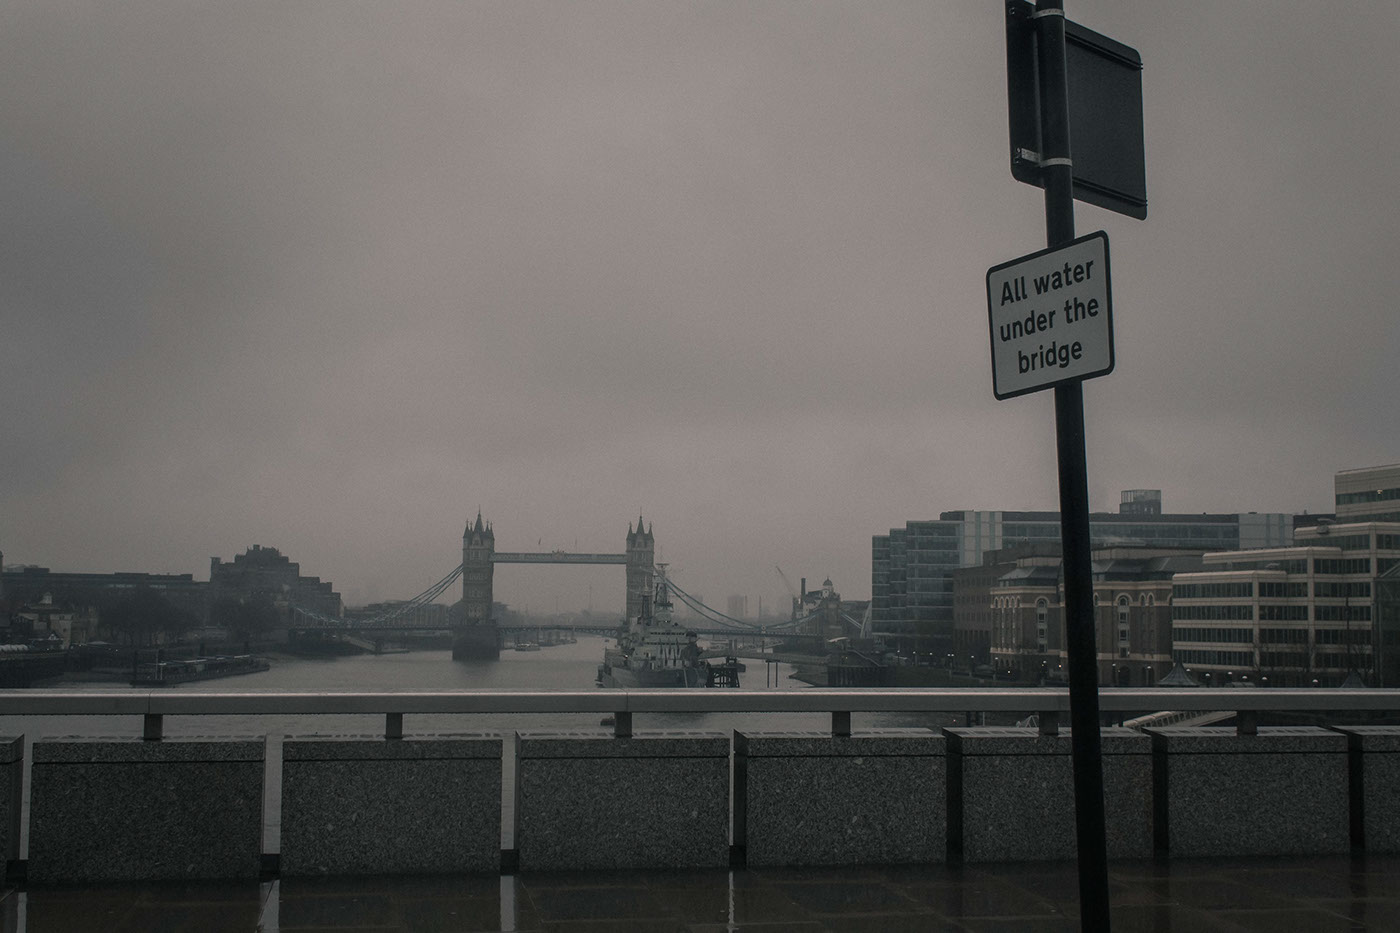 sign London type bridge conceptual art